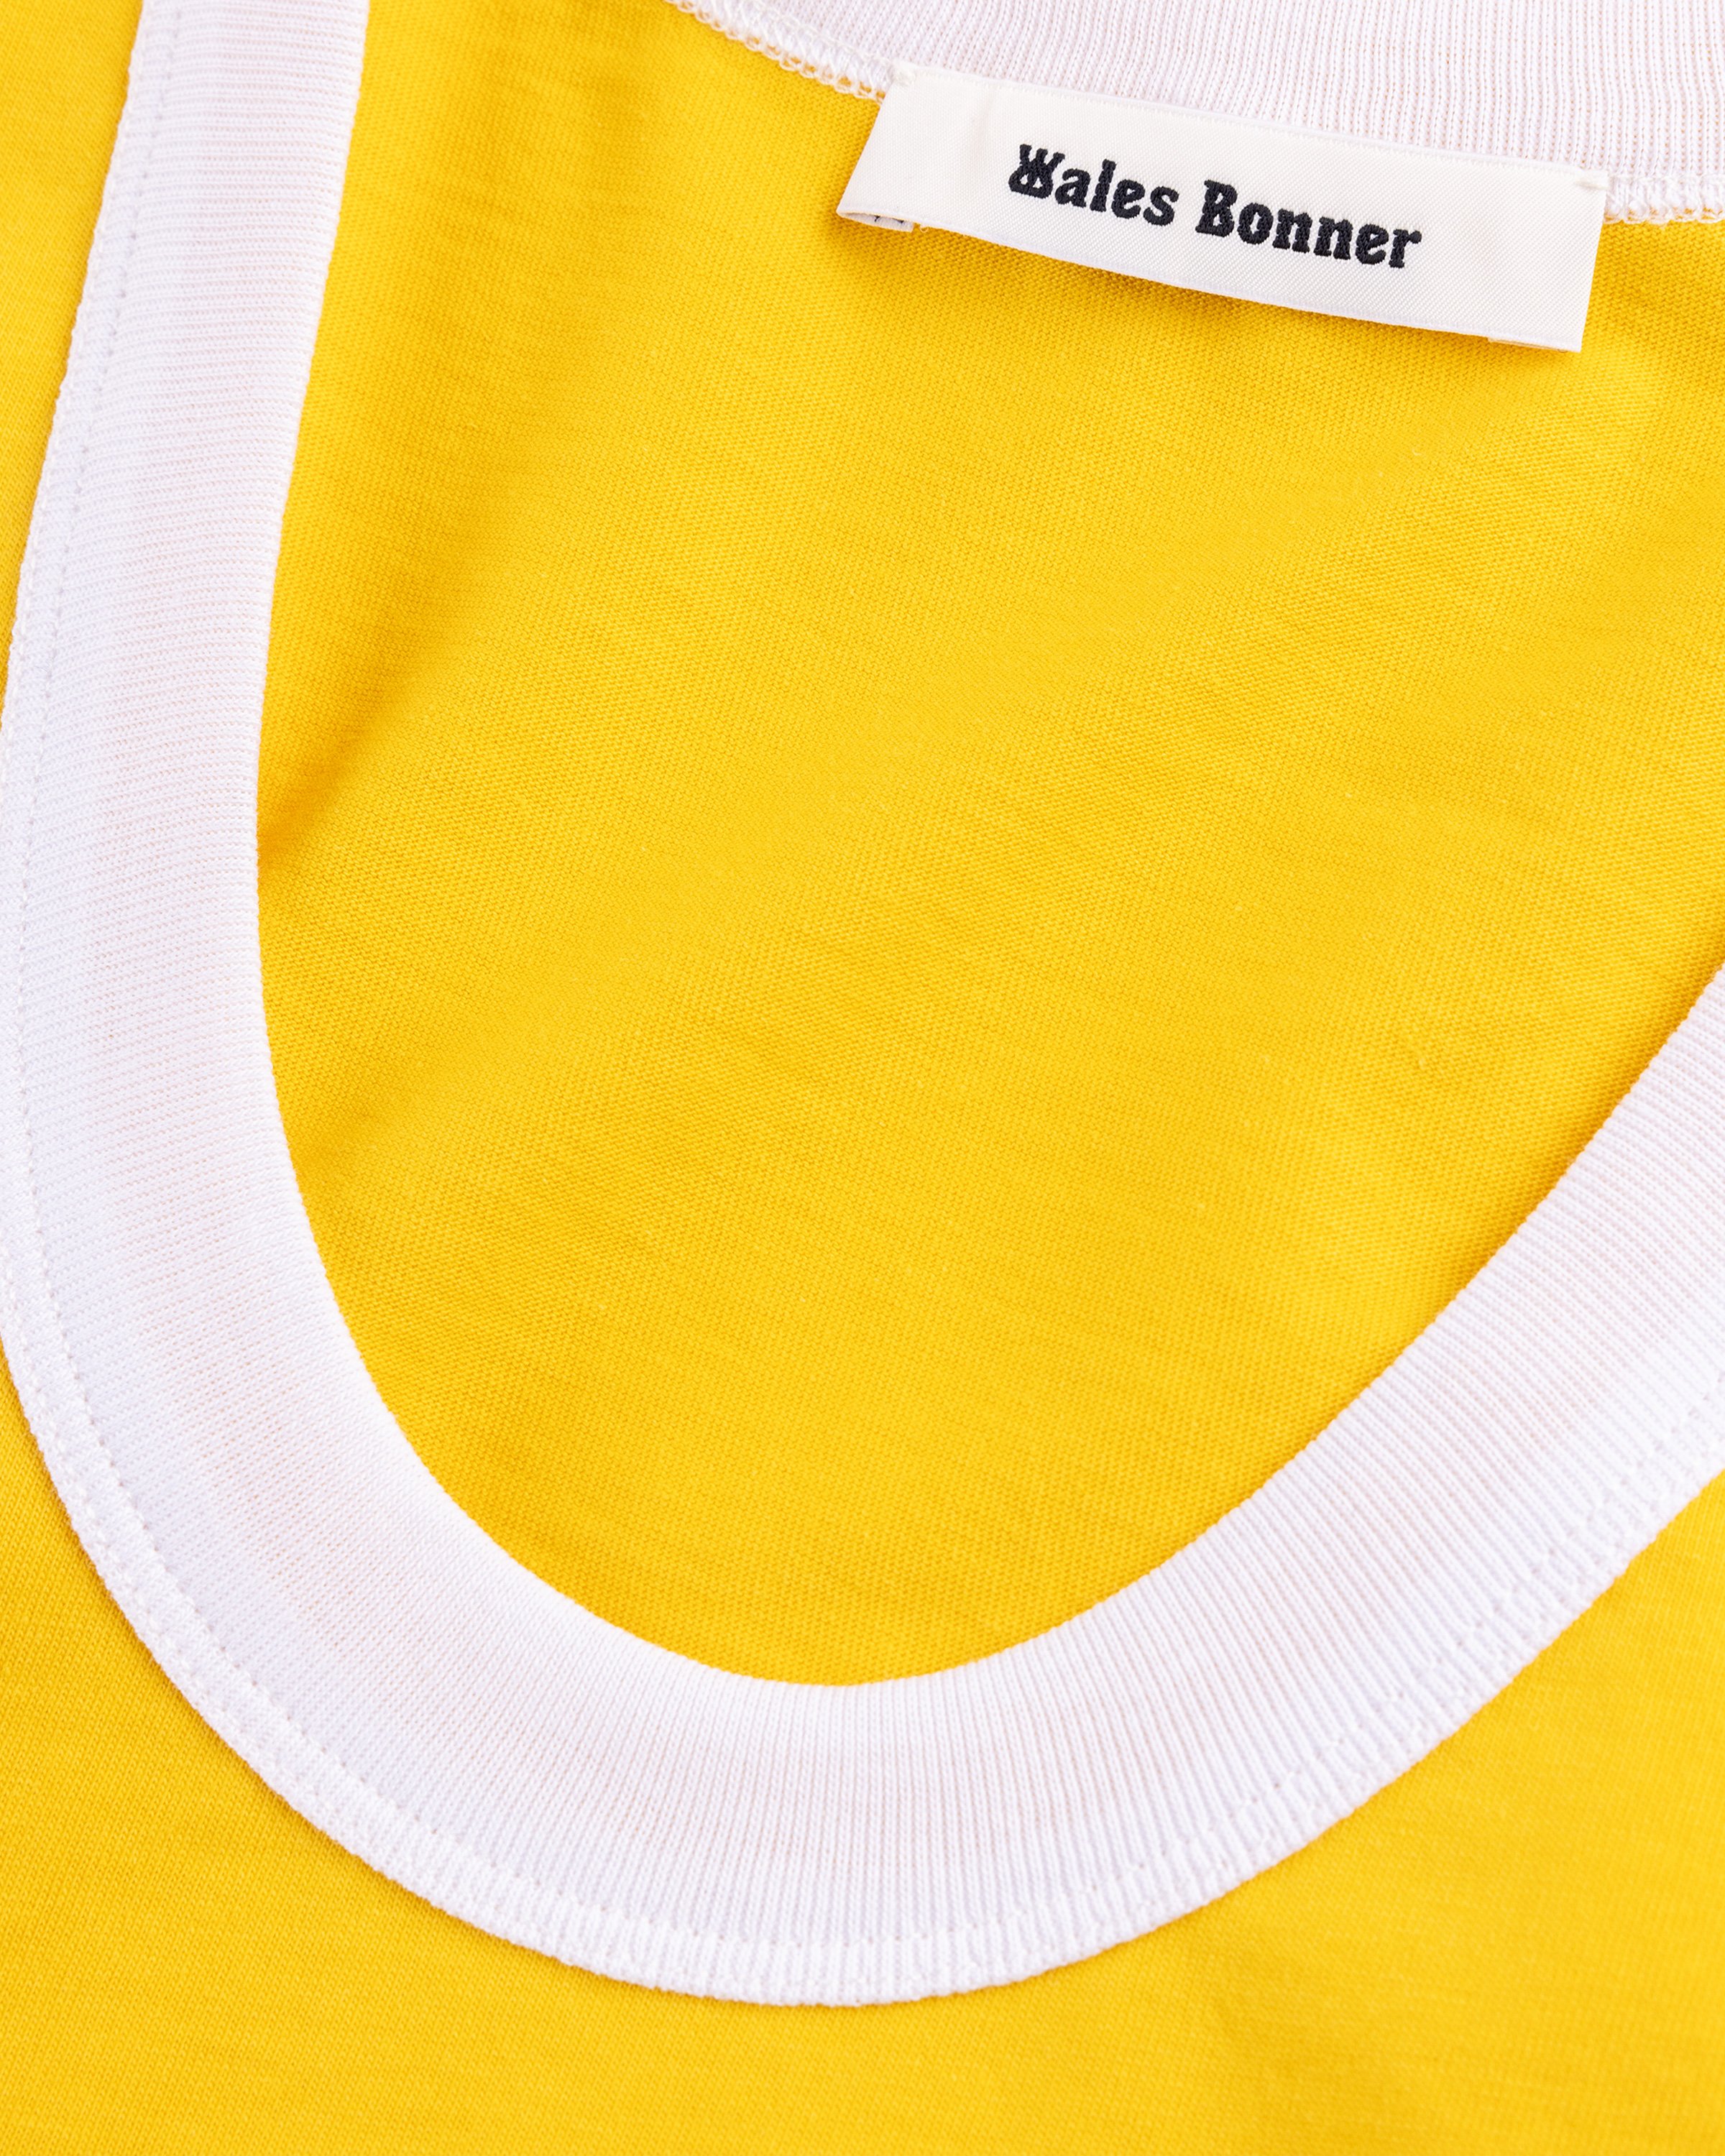 Wales Bonner - Plain T-Shirt Jersey Turmeric - Clothing - Yellow - Image 7